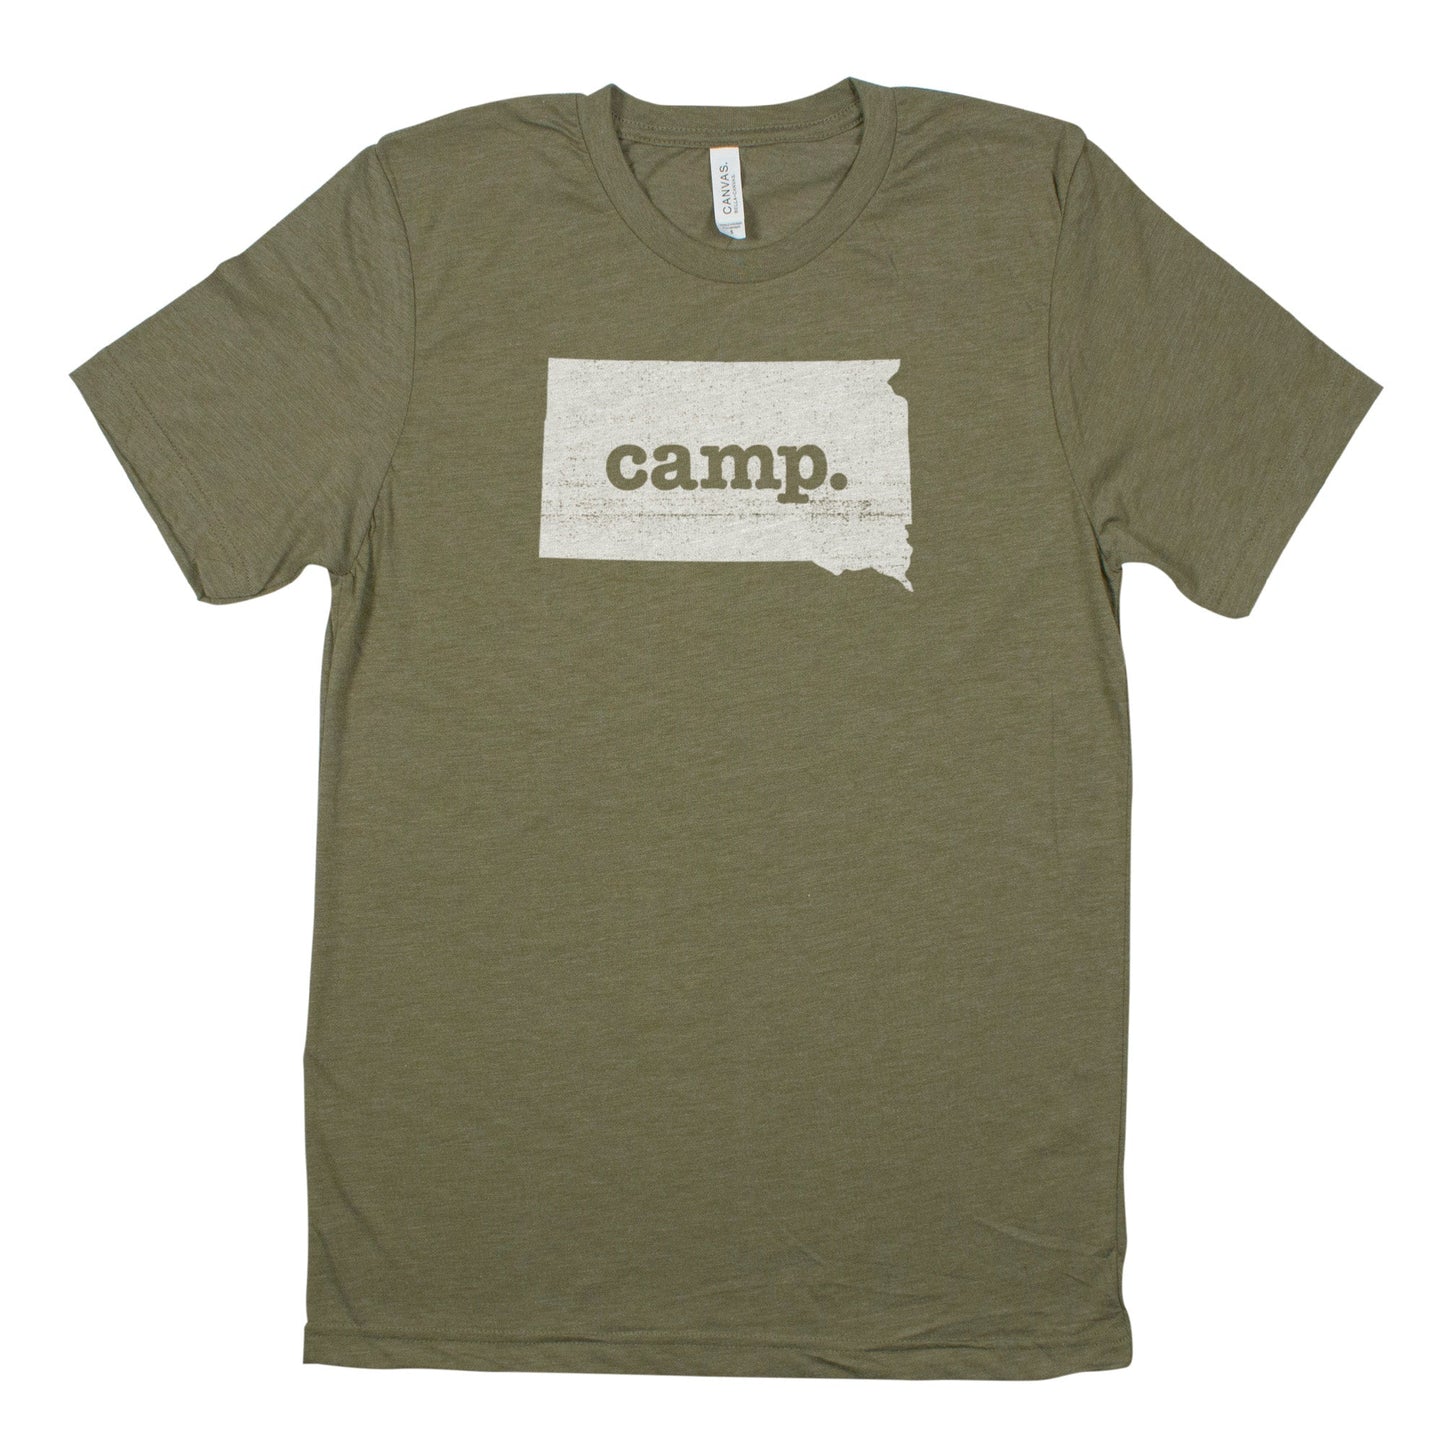 camp. Men's Unisex T-Shirt - South Dakota